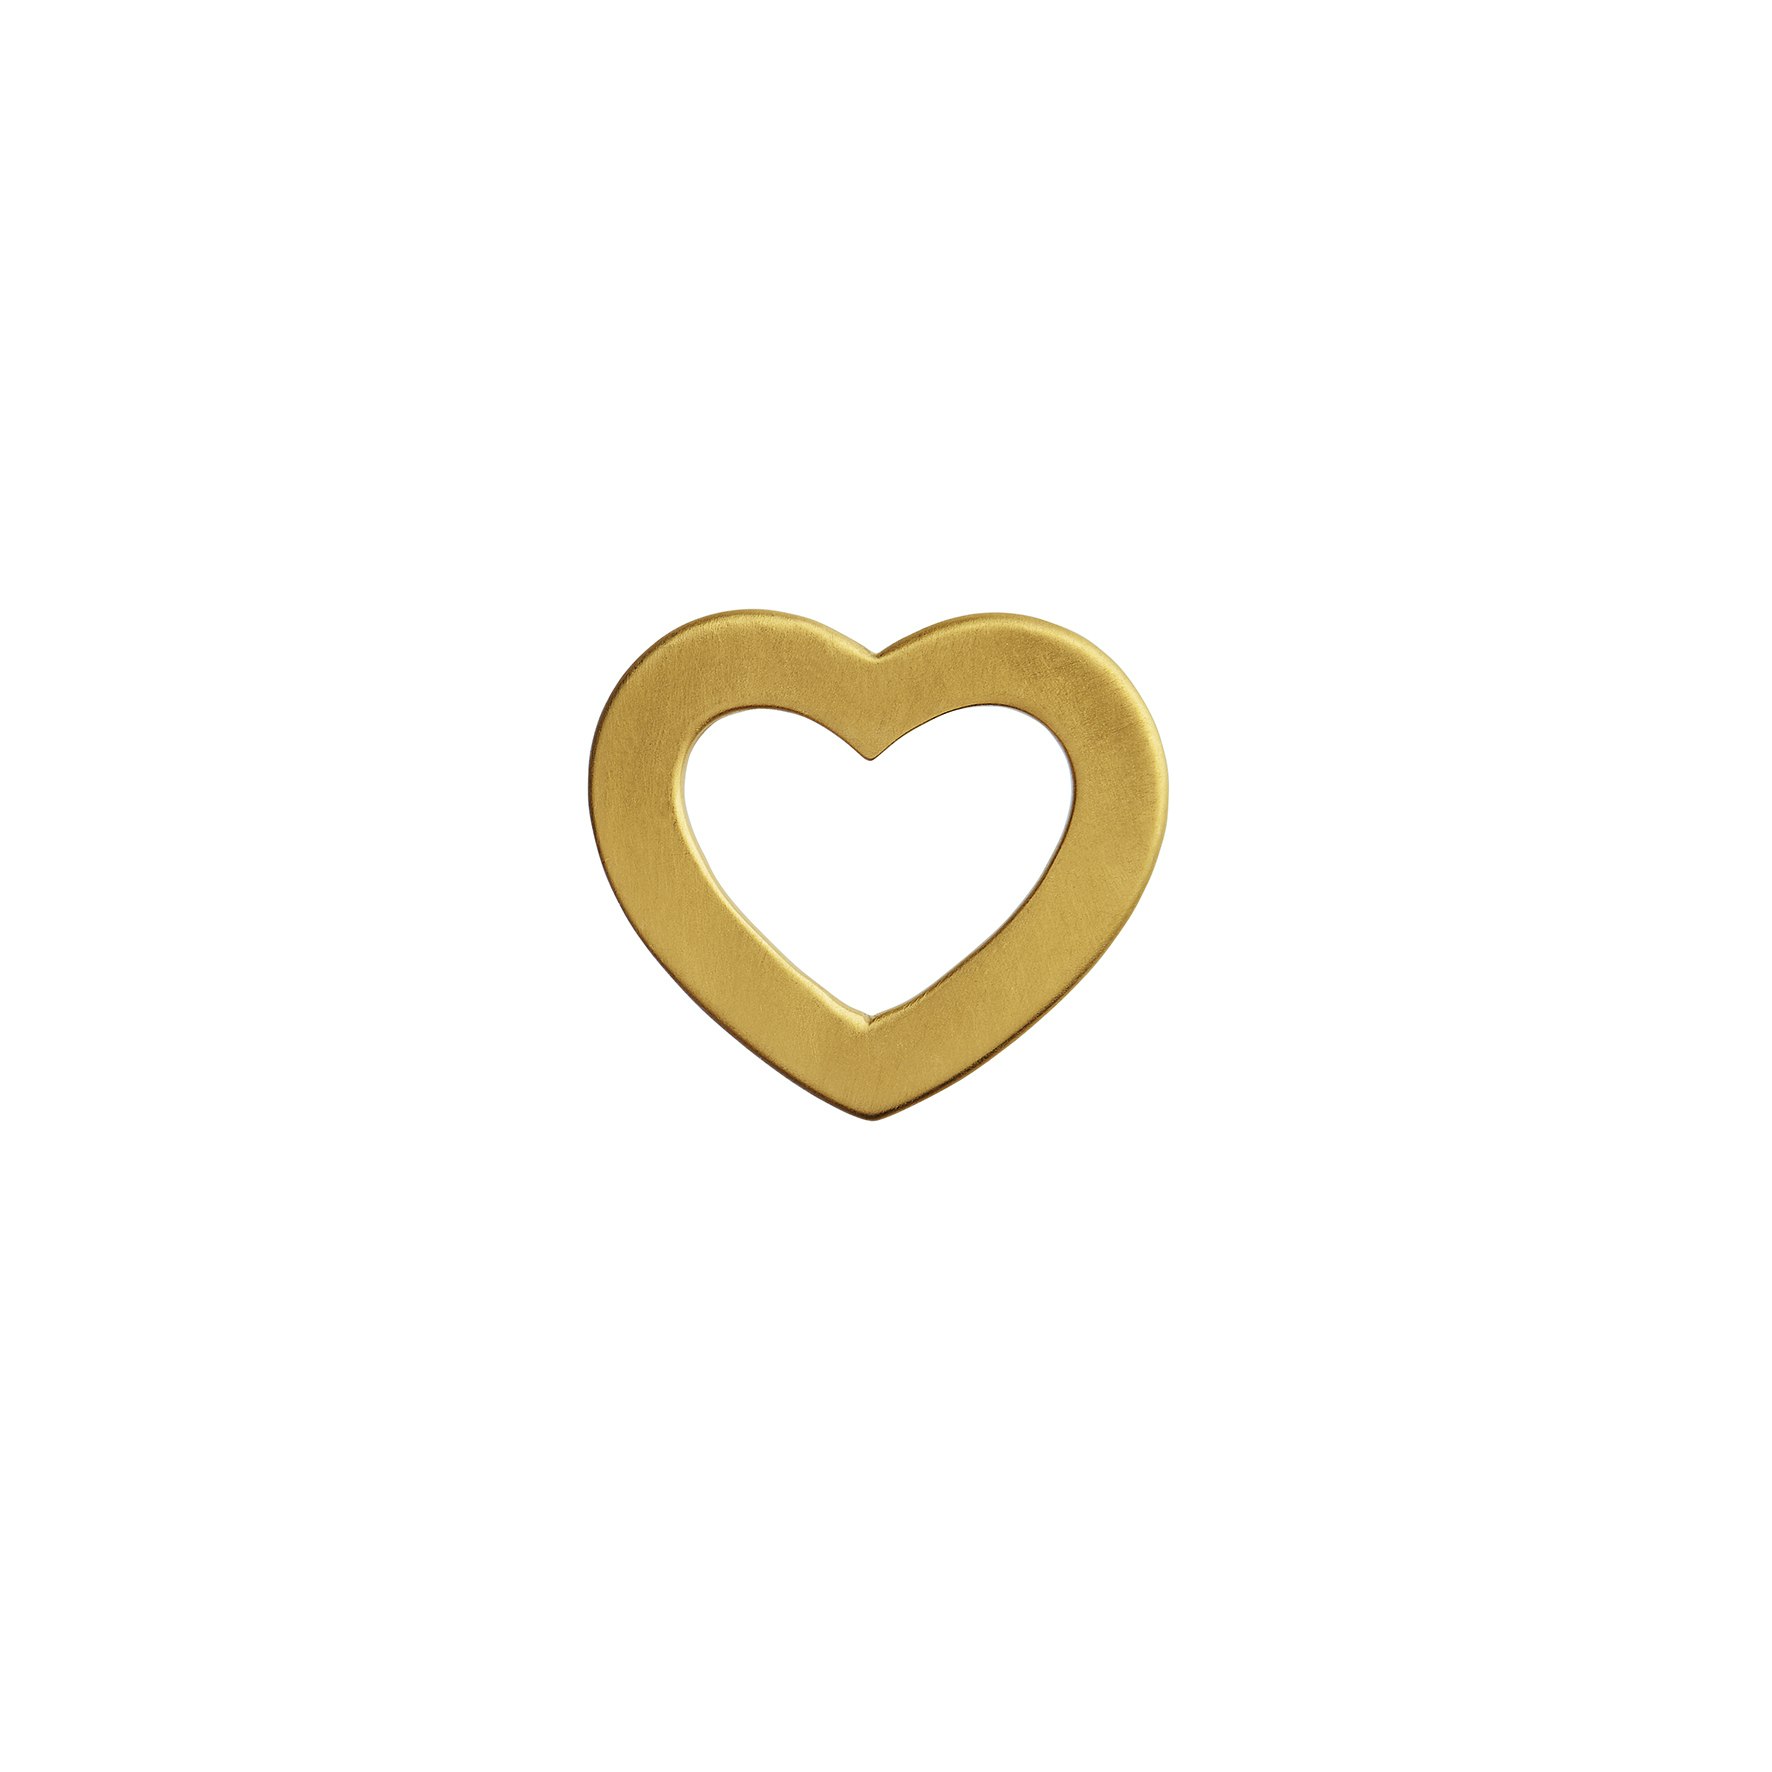 Open Love Heart Pendant von STINE A Jewelry in Vergoldet-Silber Sterling 925